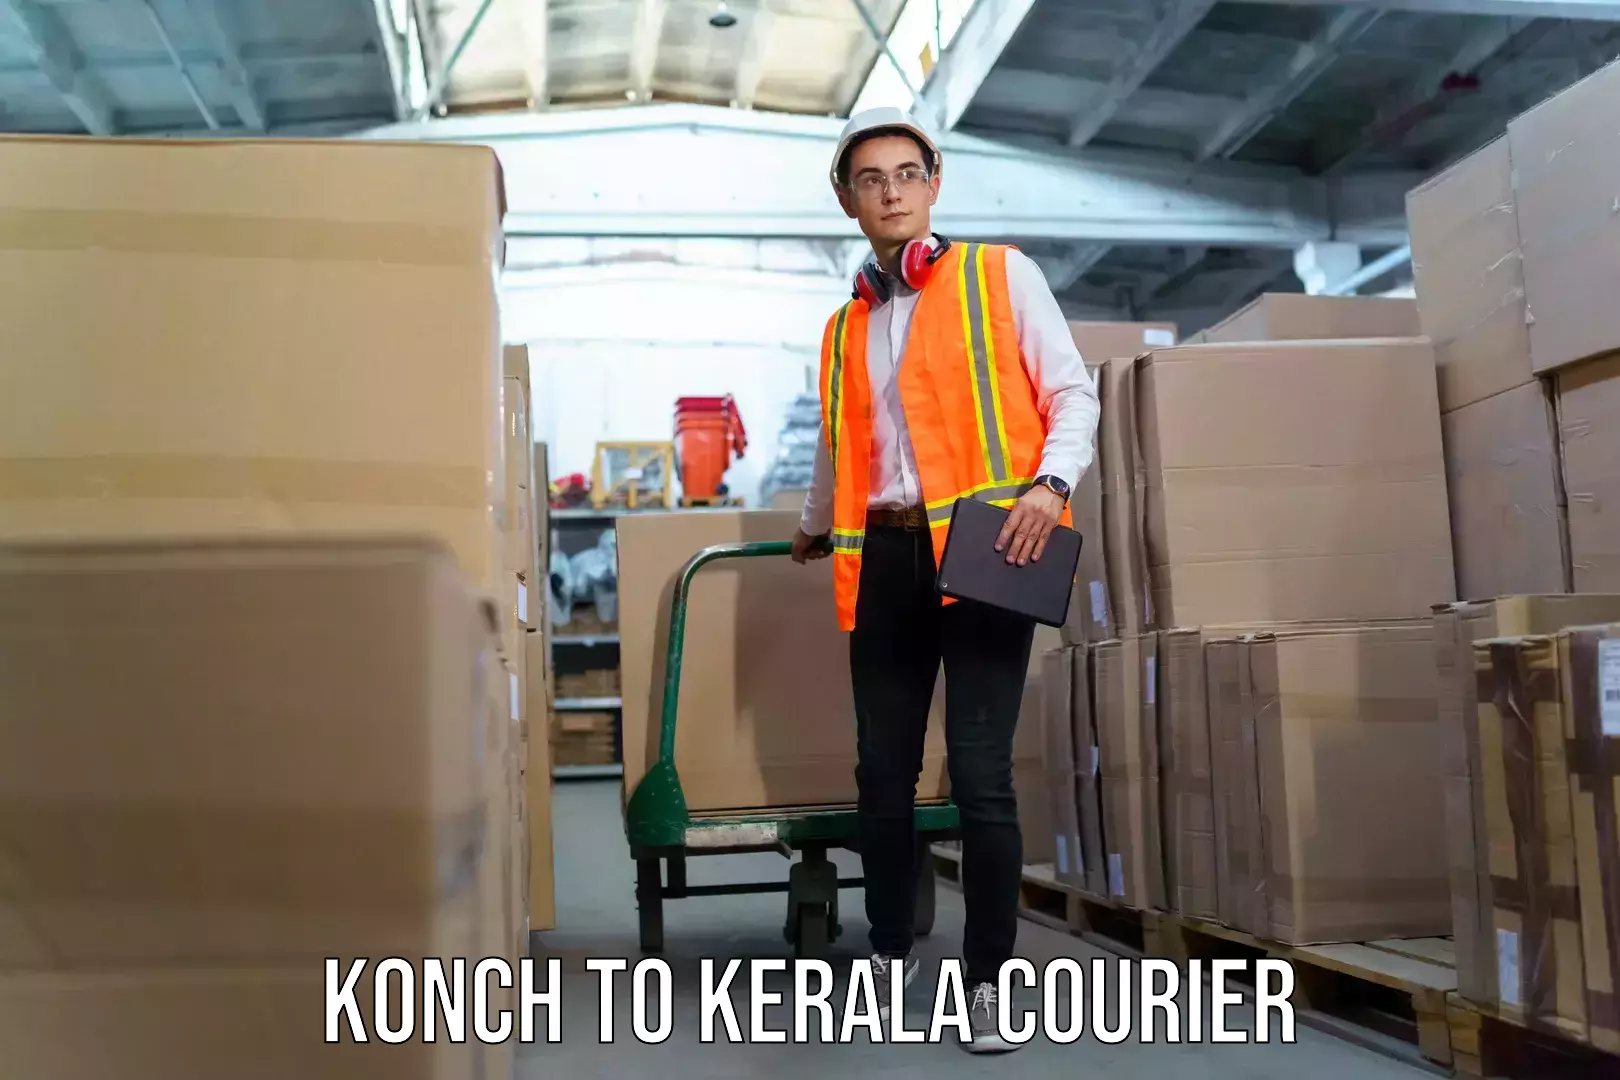 Baggage transport network Konch to Kerala